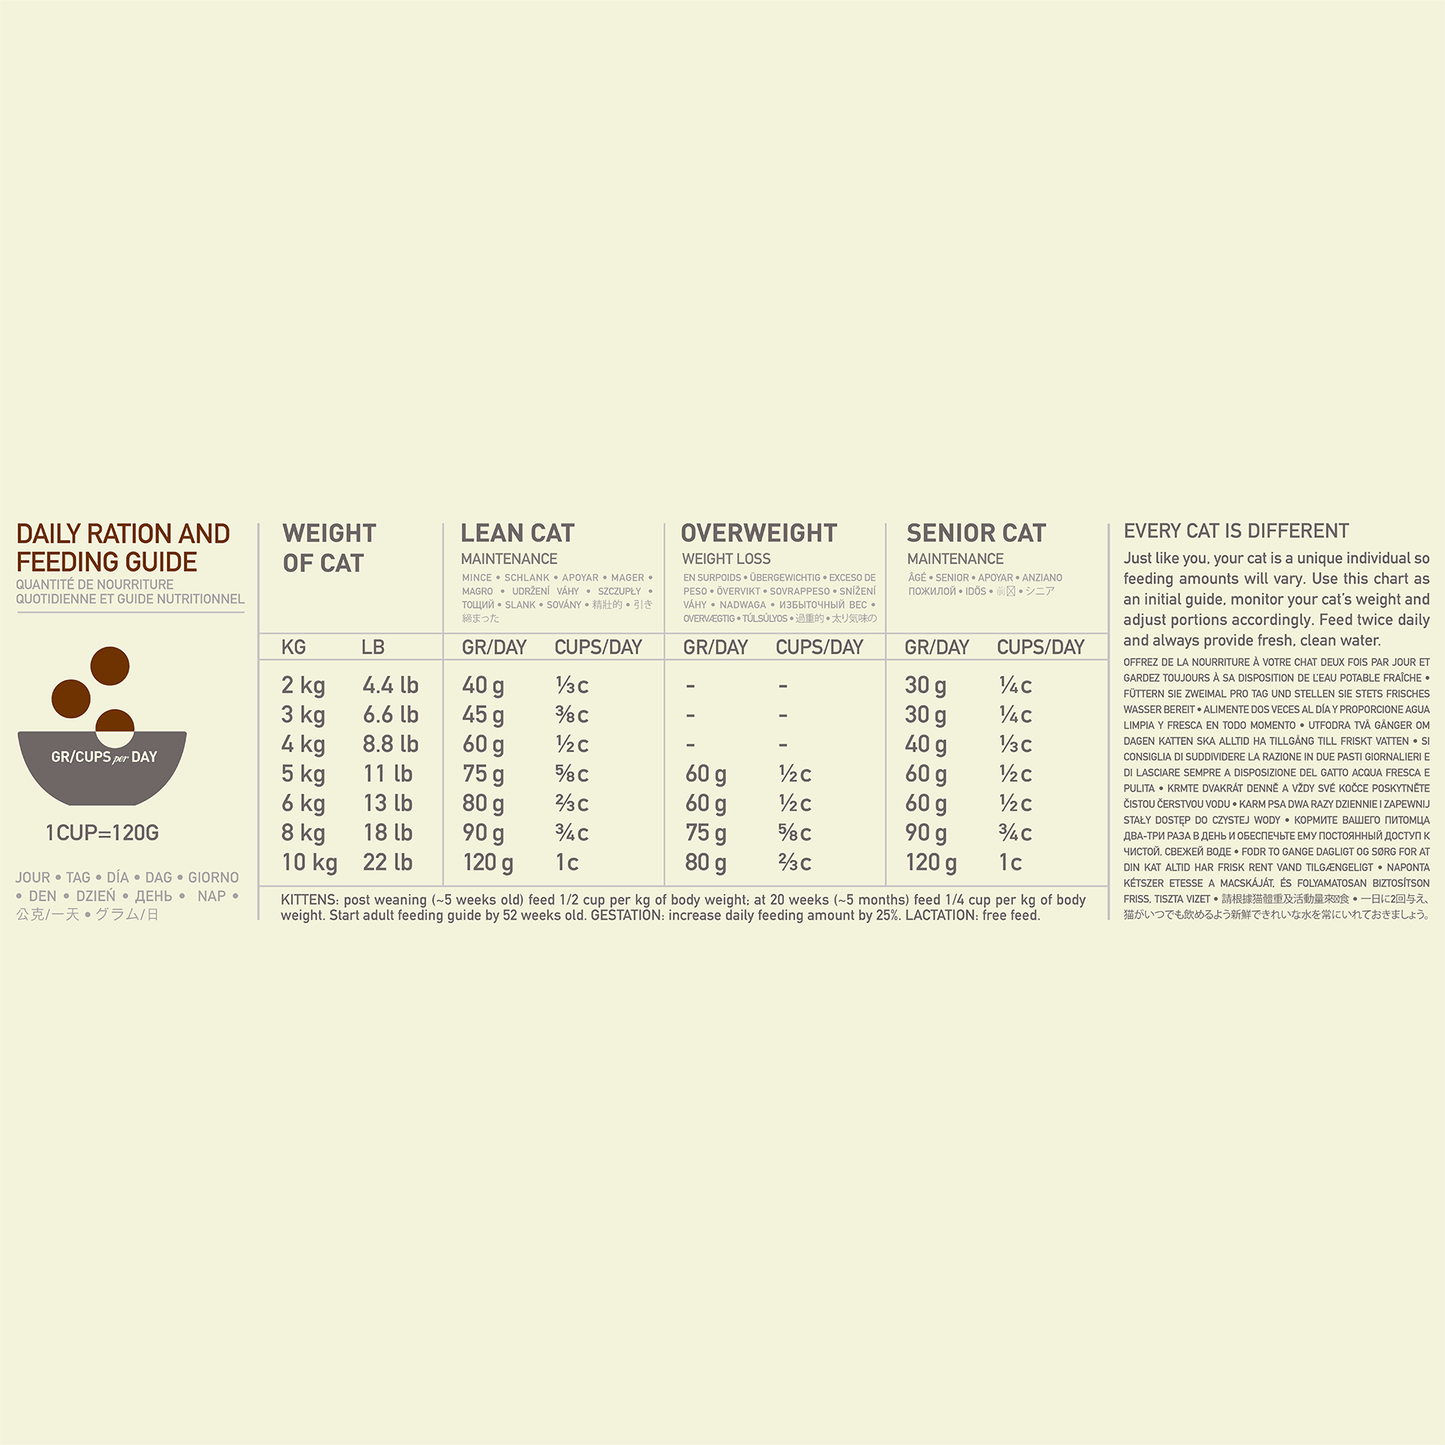 [Year End Sale: 66% OFF] ACANA Regionals Grasslands Dry Cat Food 4.5kg